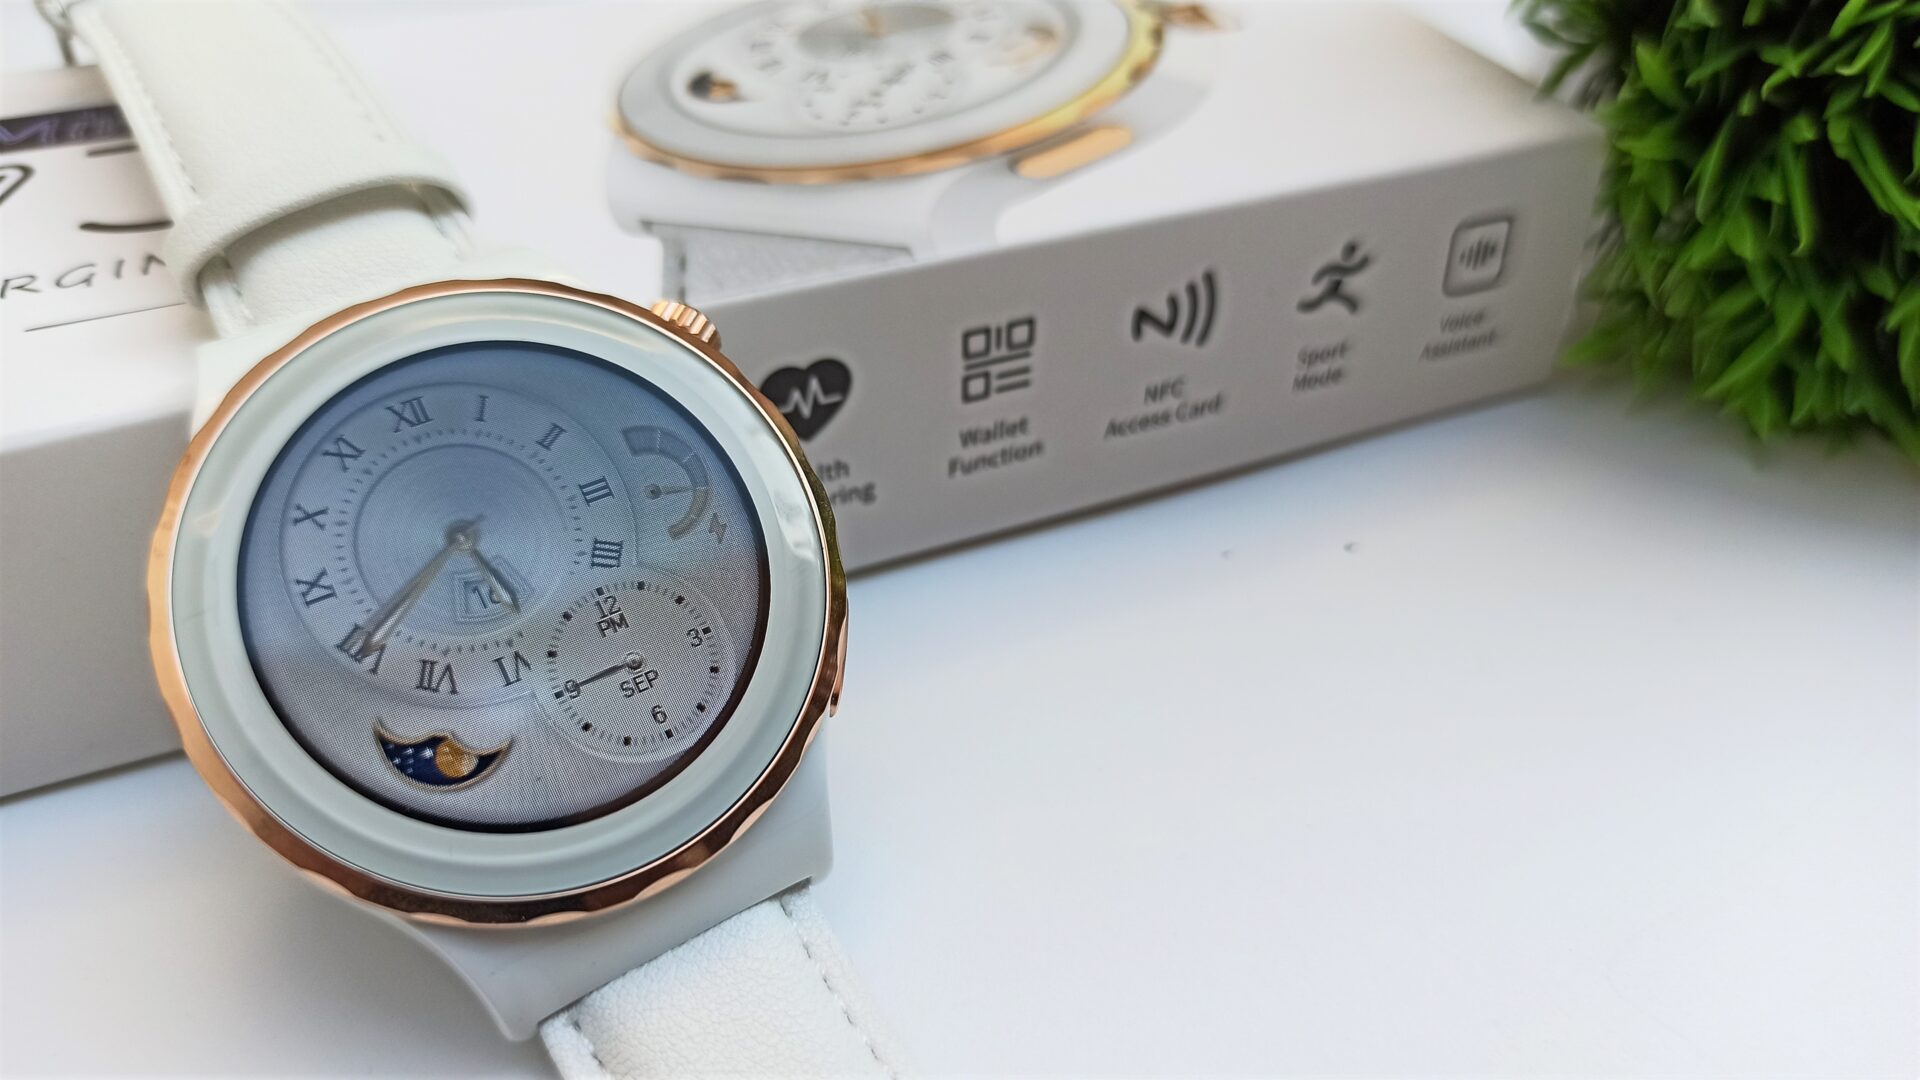 HW3 Mini Smartwatch Review